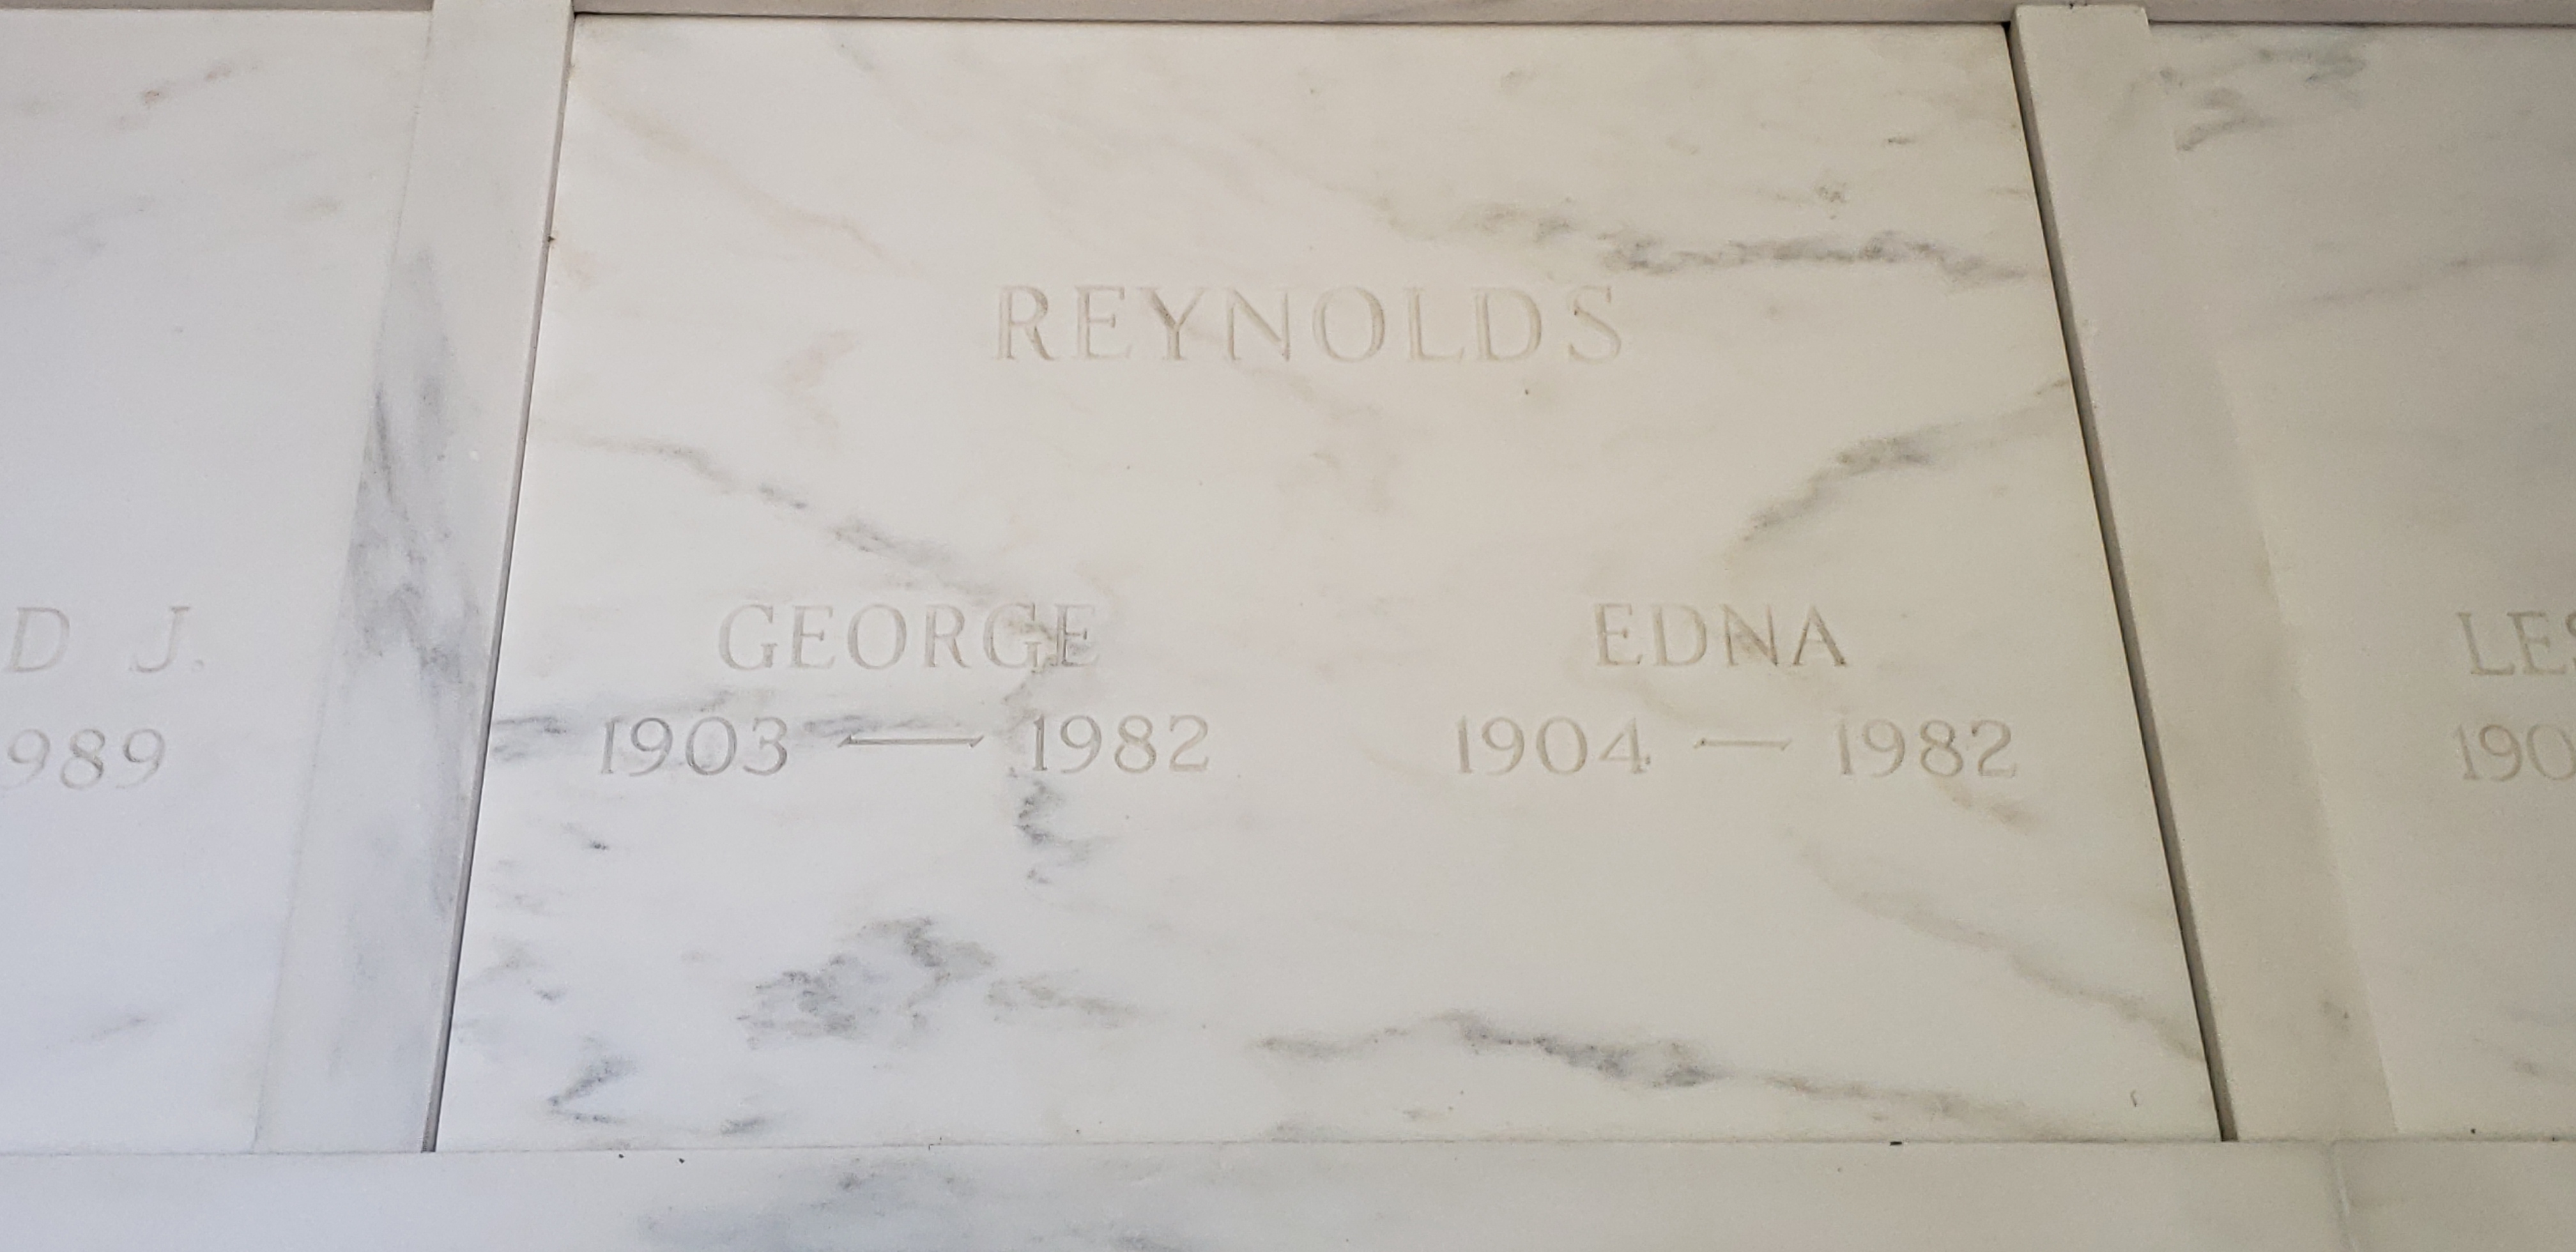 Edna Reynolds